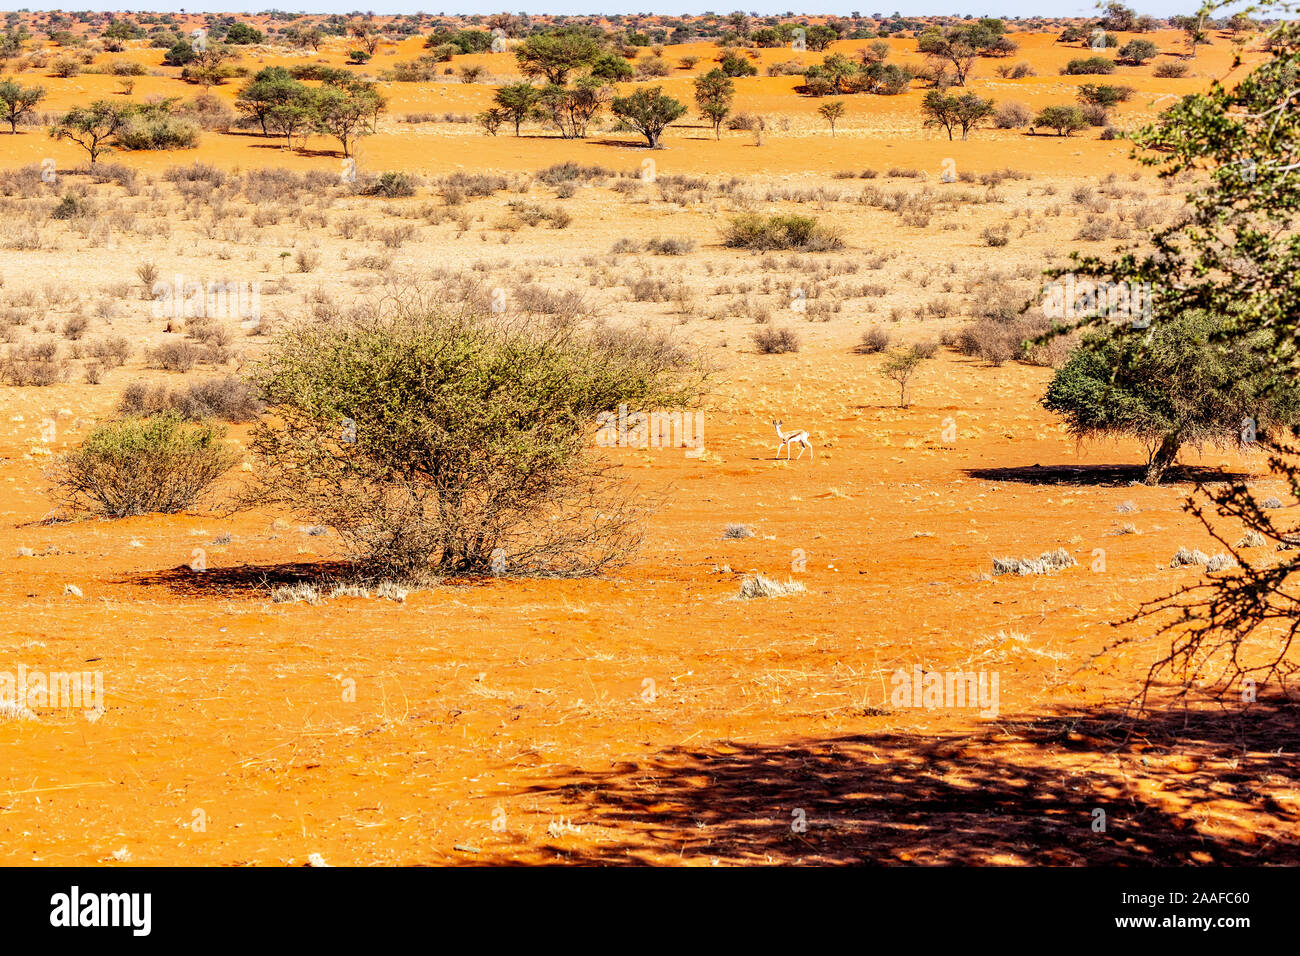 La vida silvestre en el desierto de Kalahari, Namibia, África Foto de stock